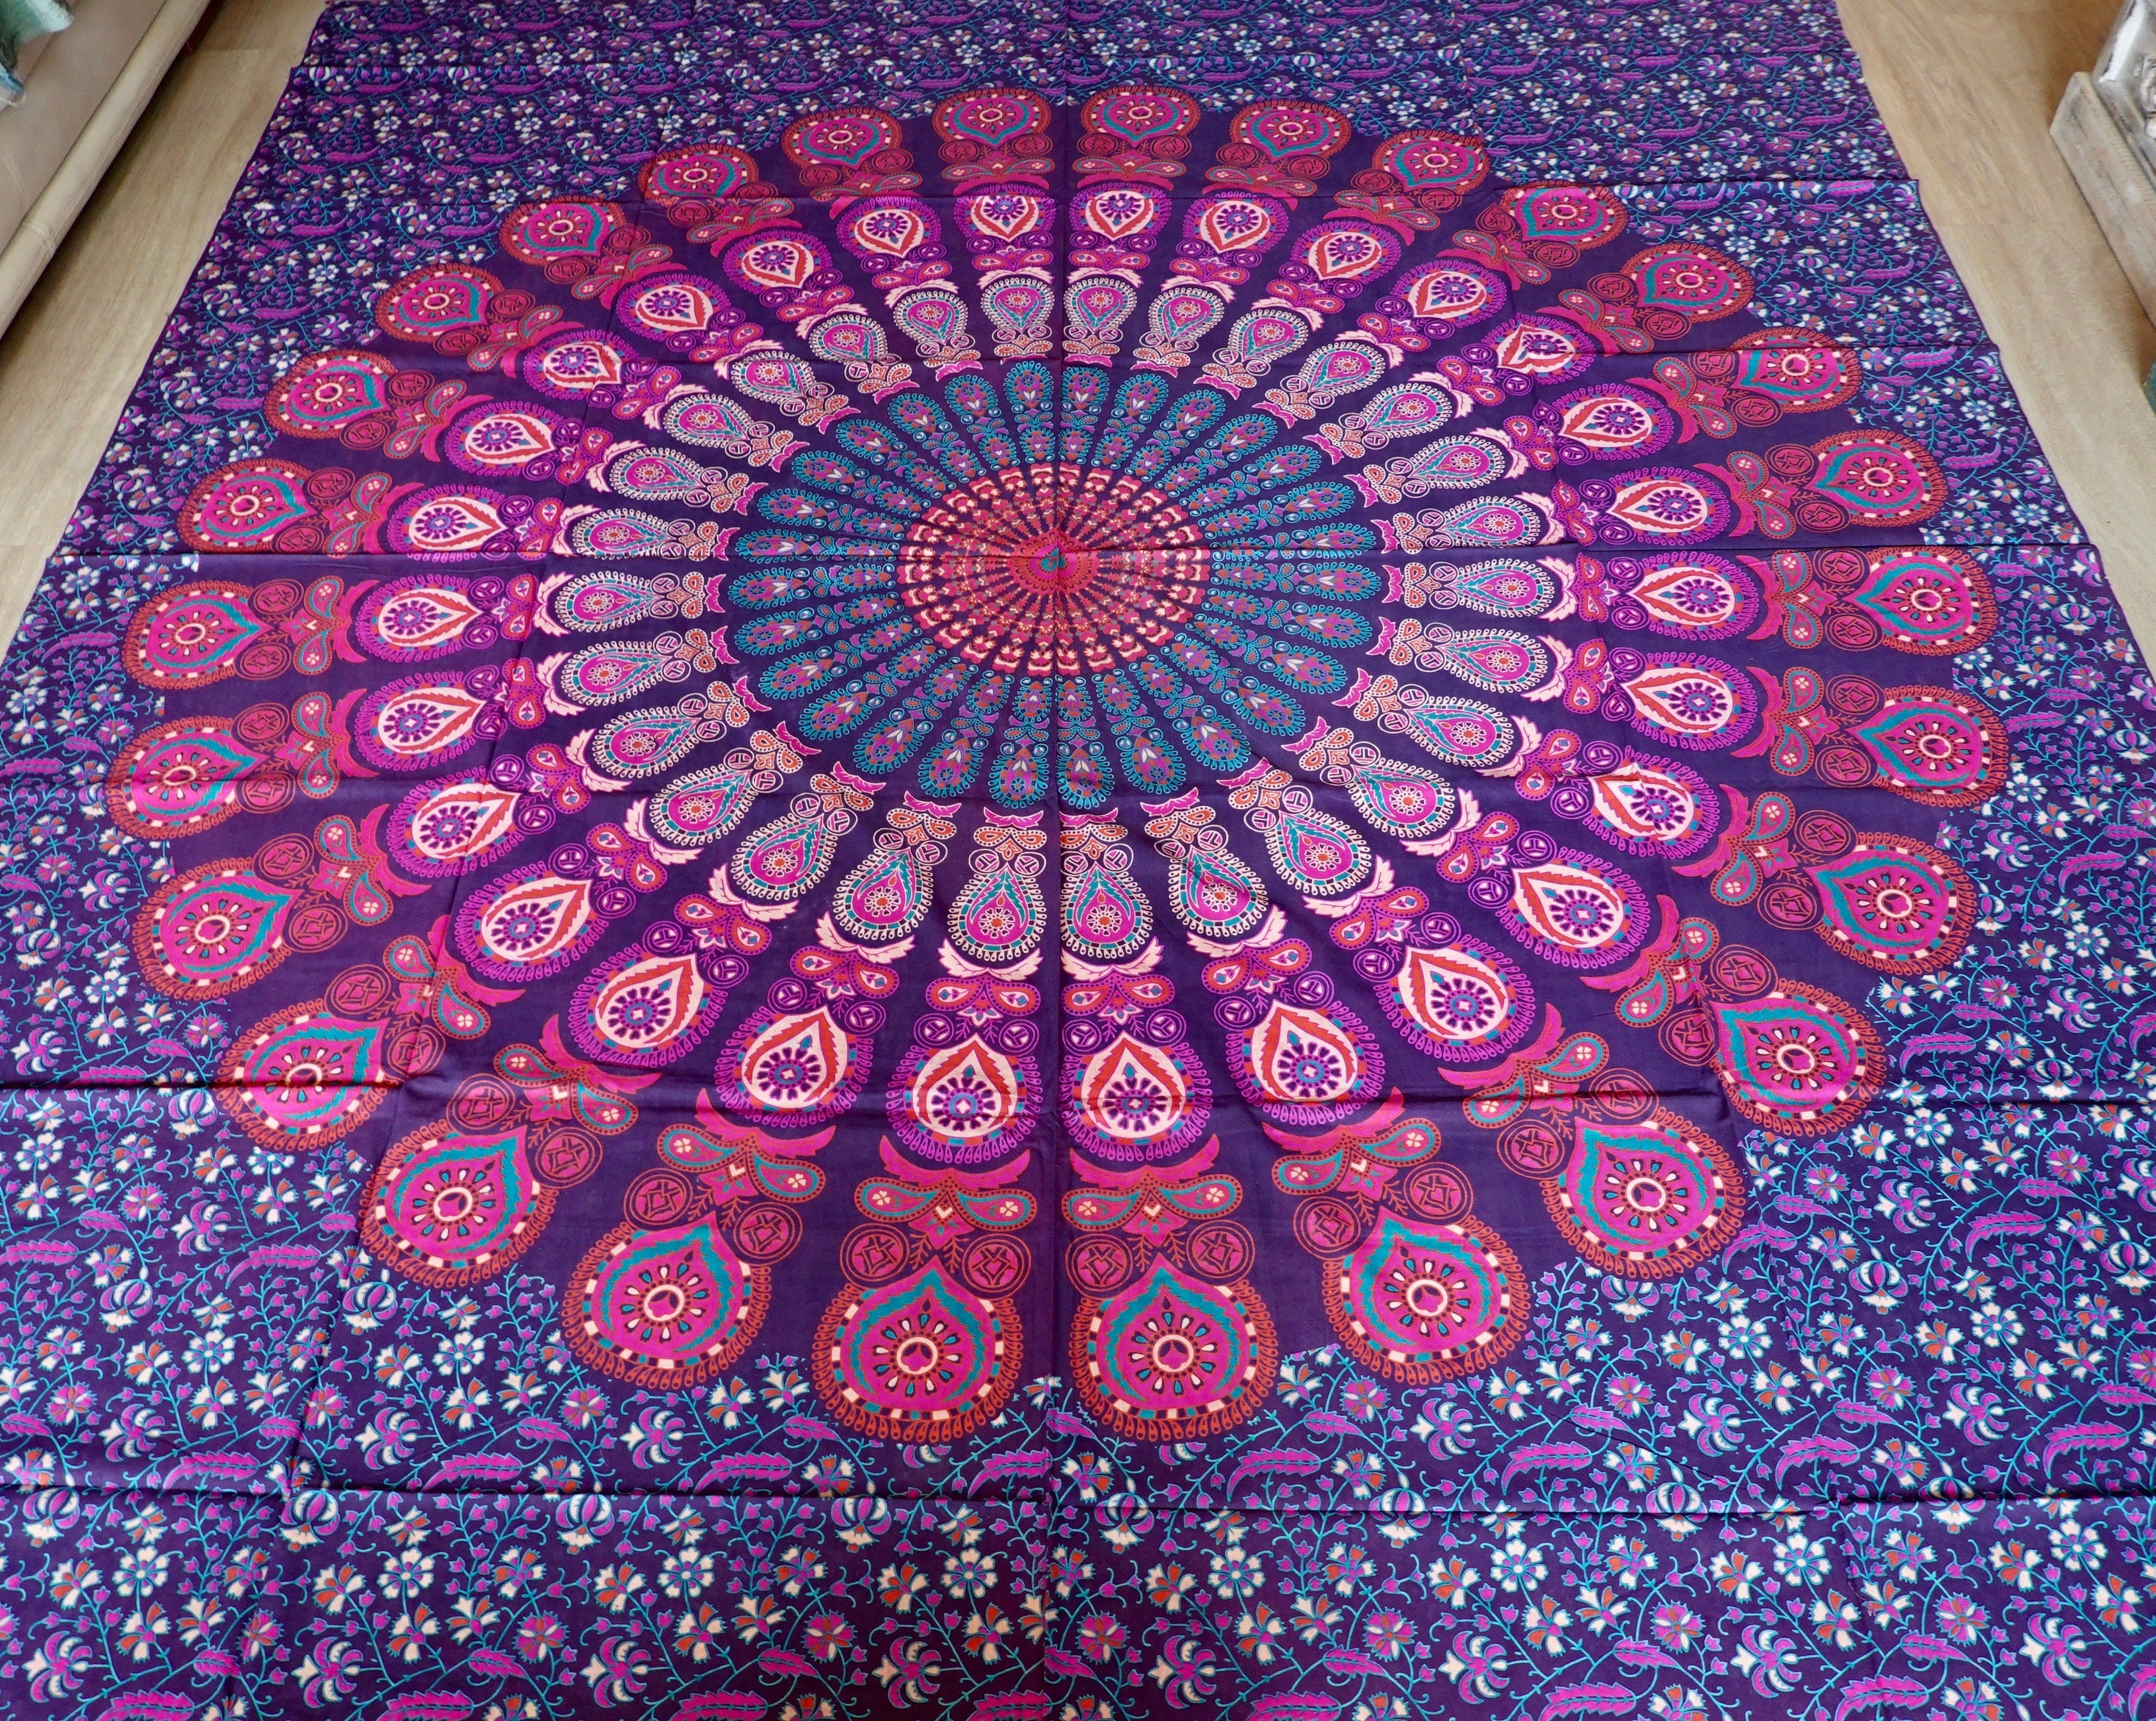 Tages-decke Mandala Wandbehang Bettüberwurf Deko-tuch Indien Goa Yoga Hippie Top 